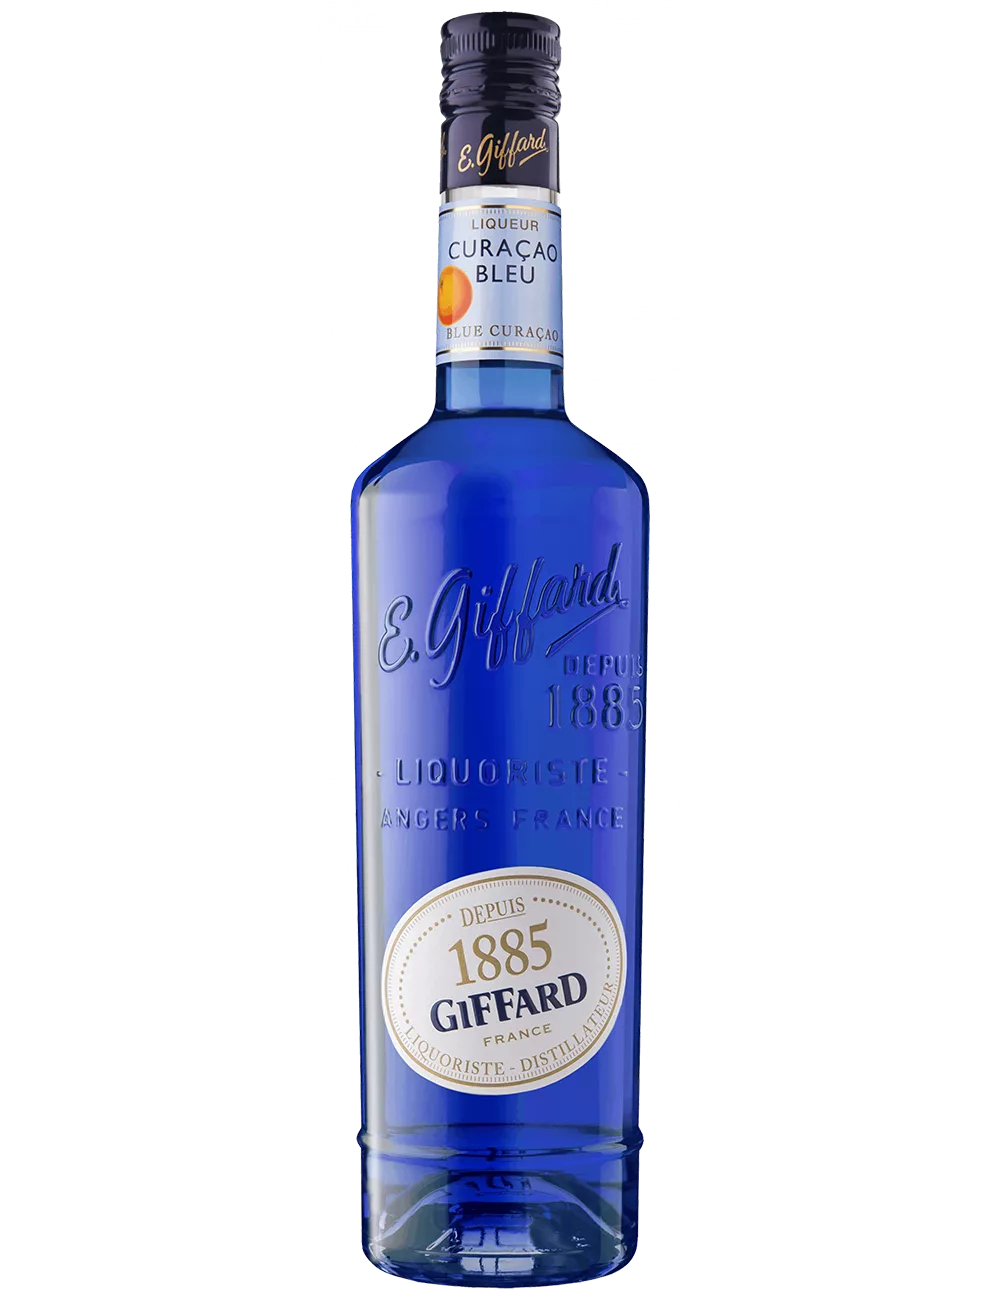 Giffard - Curaçao Bleu - Liqueur